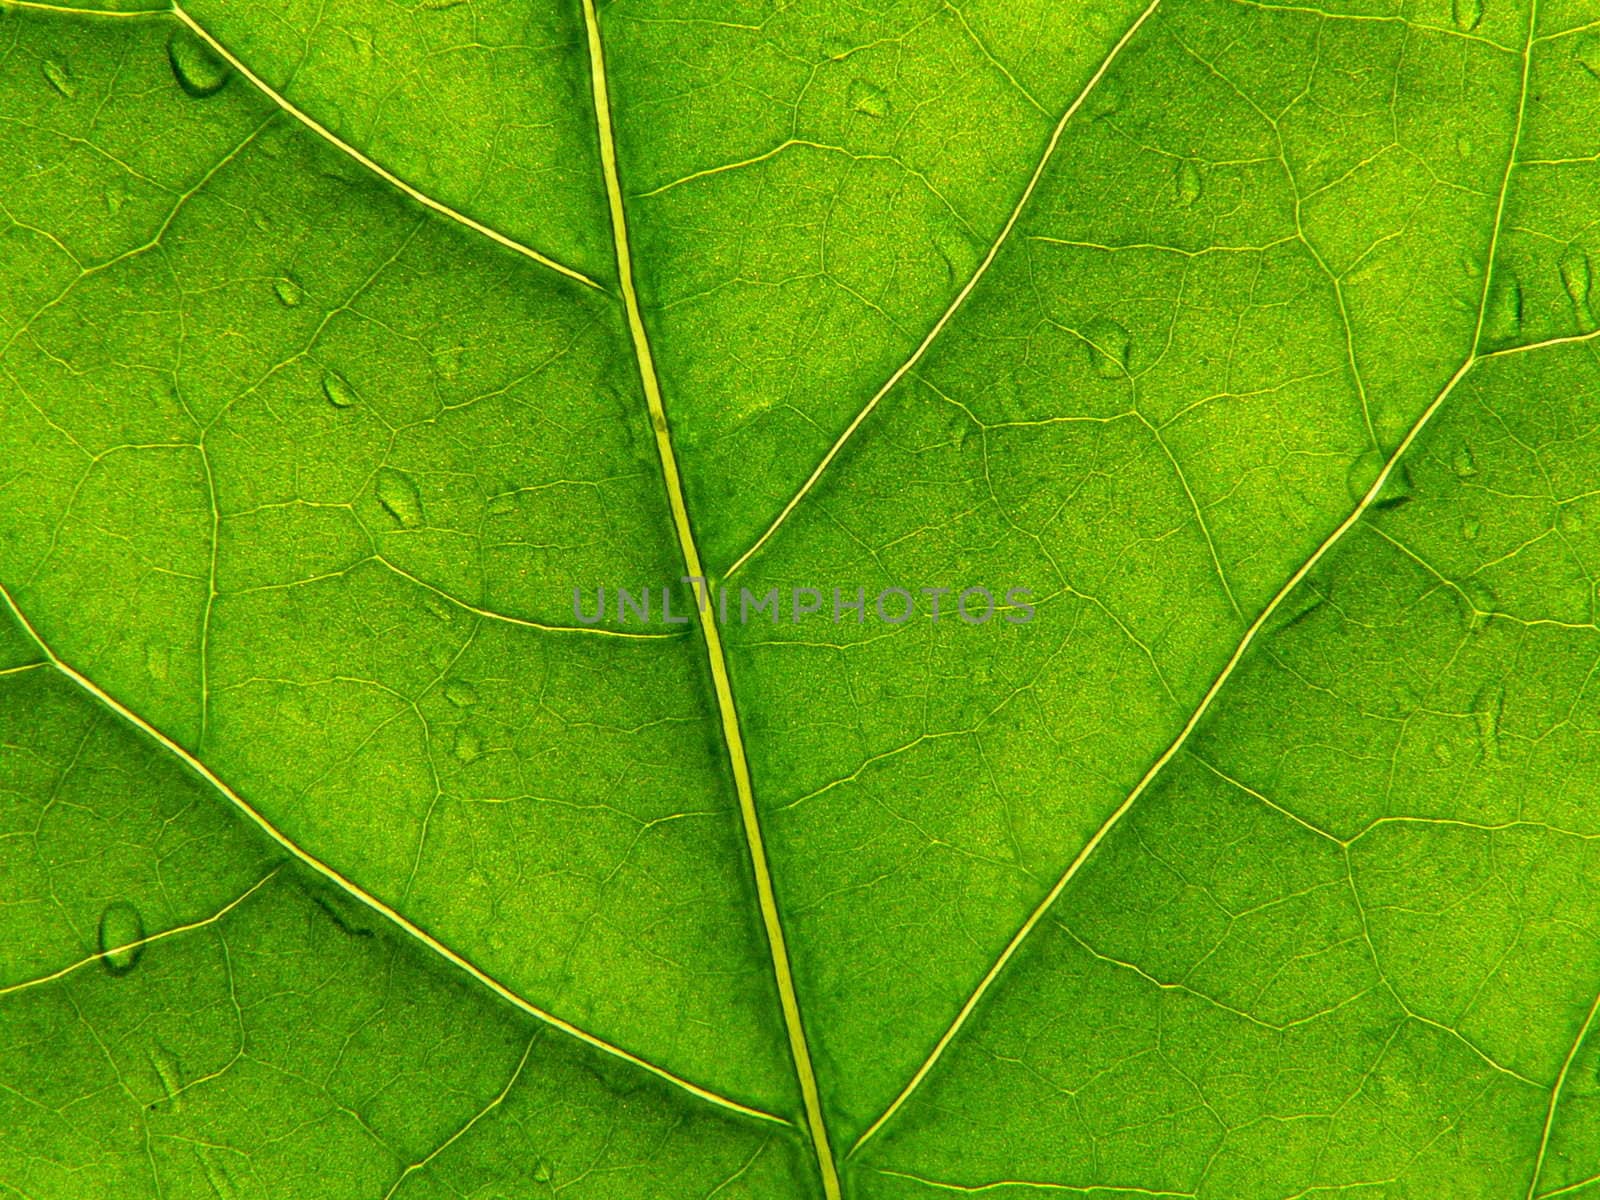 Green leaf with drop of rain